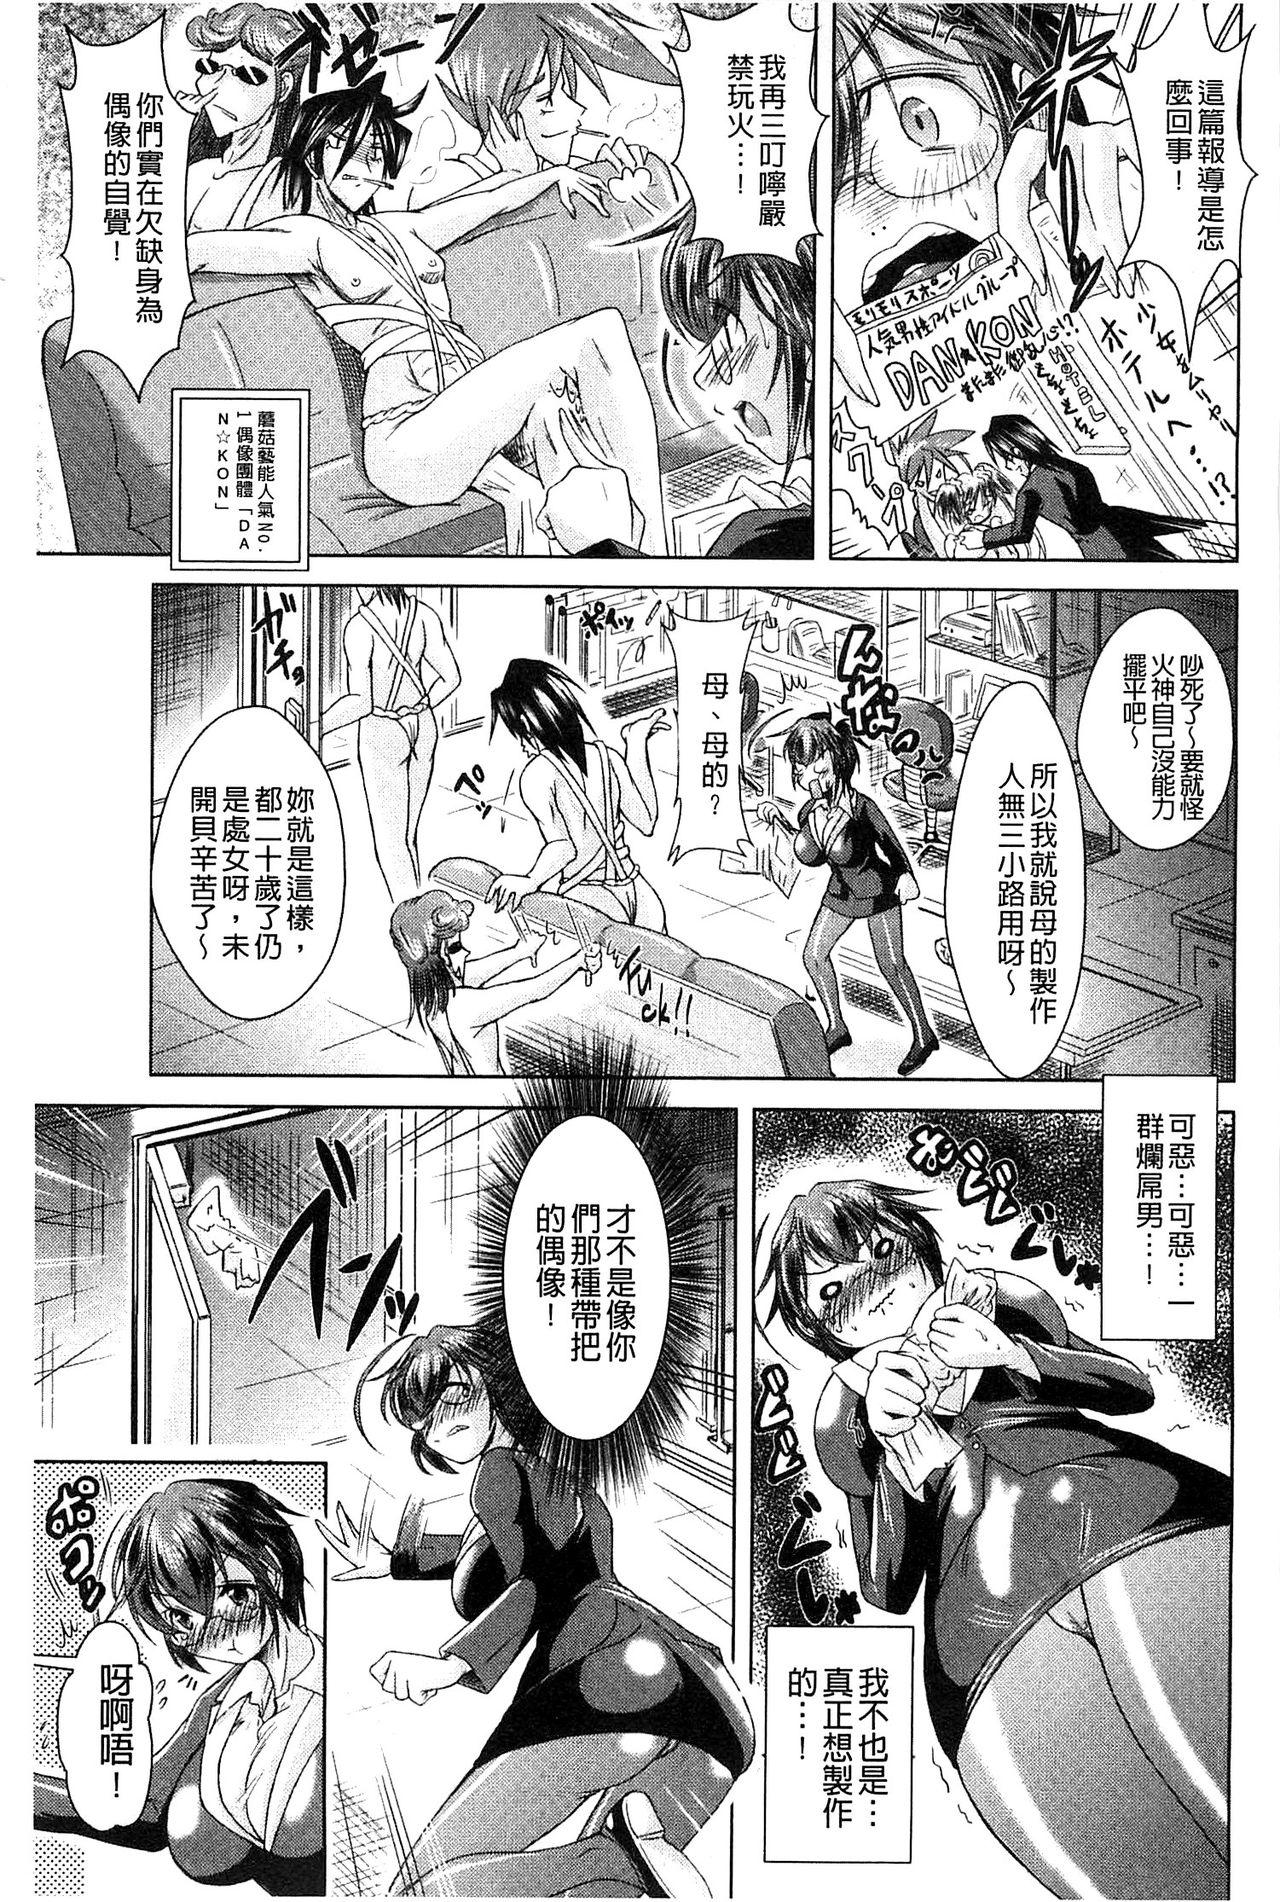 Nalgas Ama Shota Exgf - Page 4